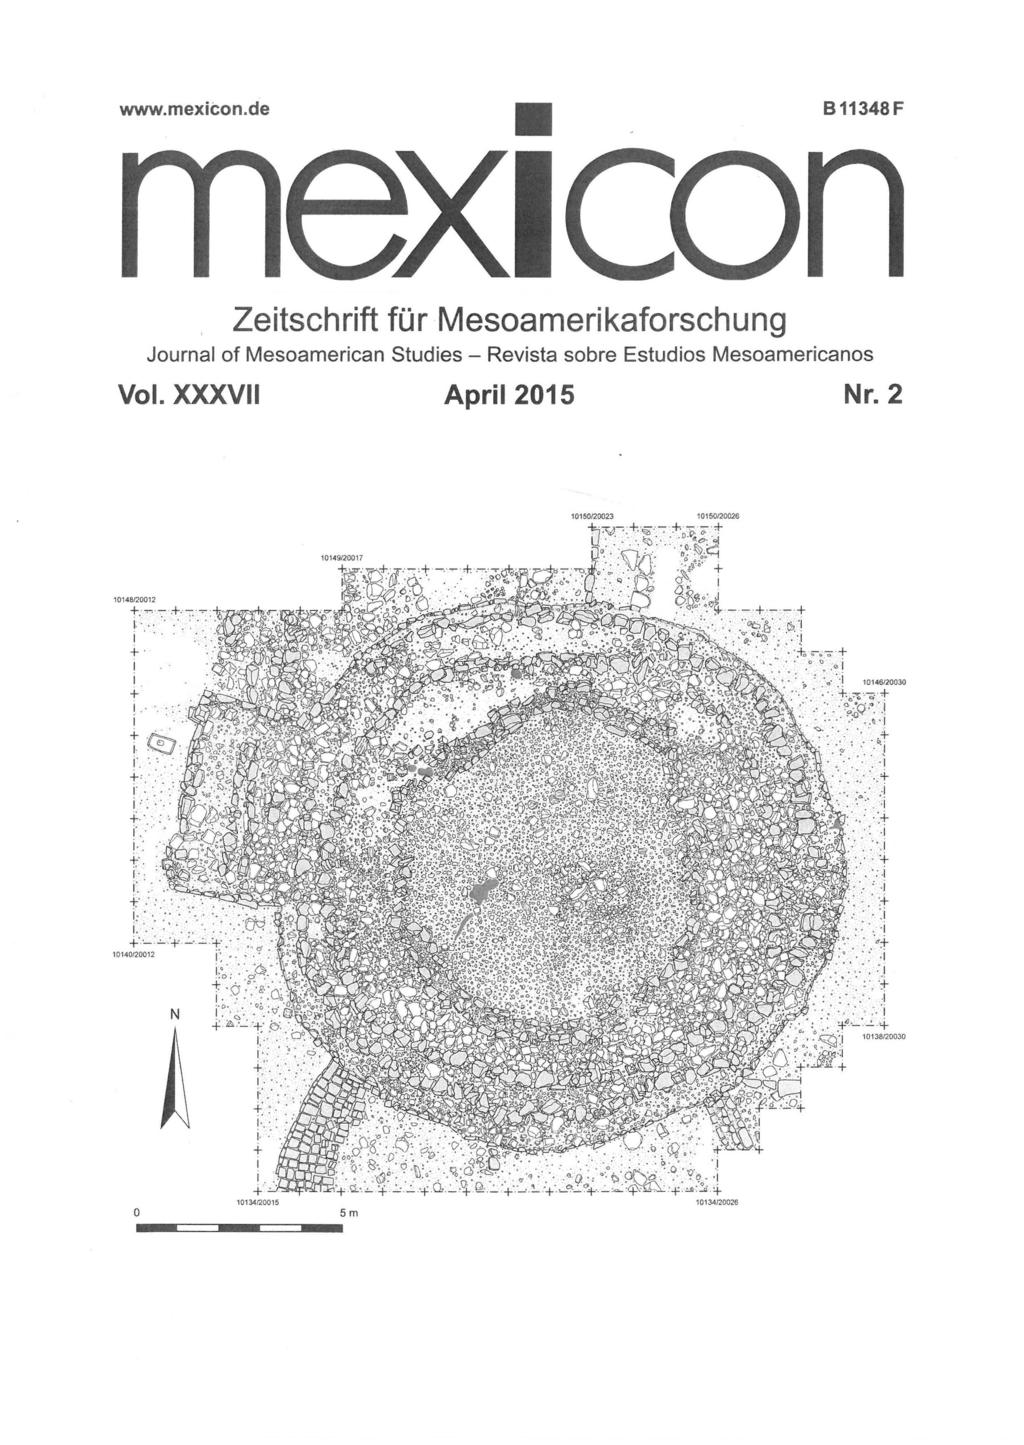 www.mexicon.de B11348F Zeitschrift for Mesoamerikaforschung Journal of Mesoamerican Studies - Revista sobre Estudios Mesoamericanos Vol. XXXVII April 2015 Nr. 2 101 48120012 +.,.., -:- +-:: ~ : j... i.